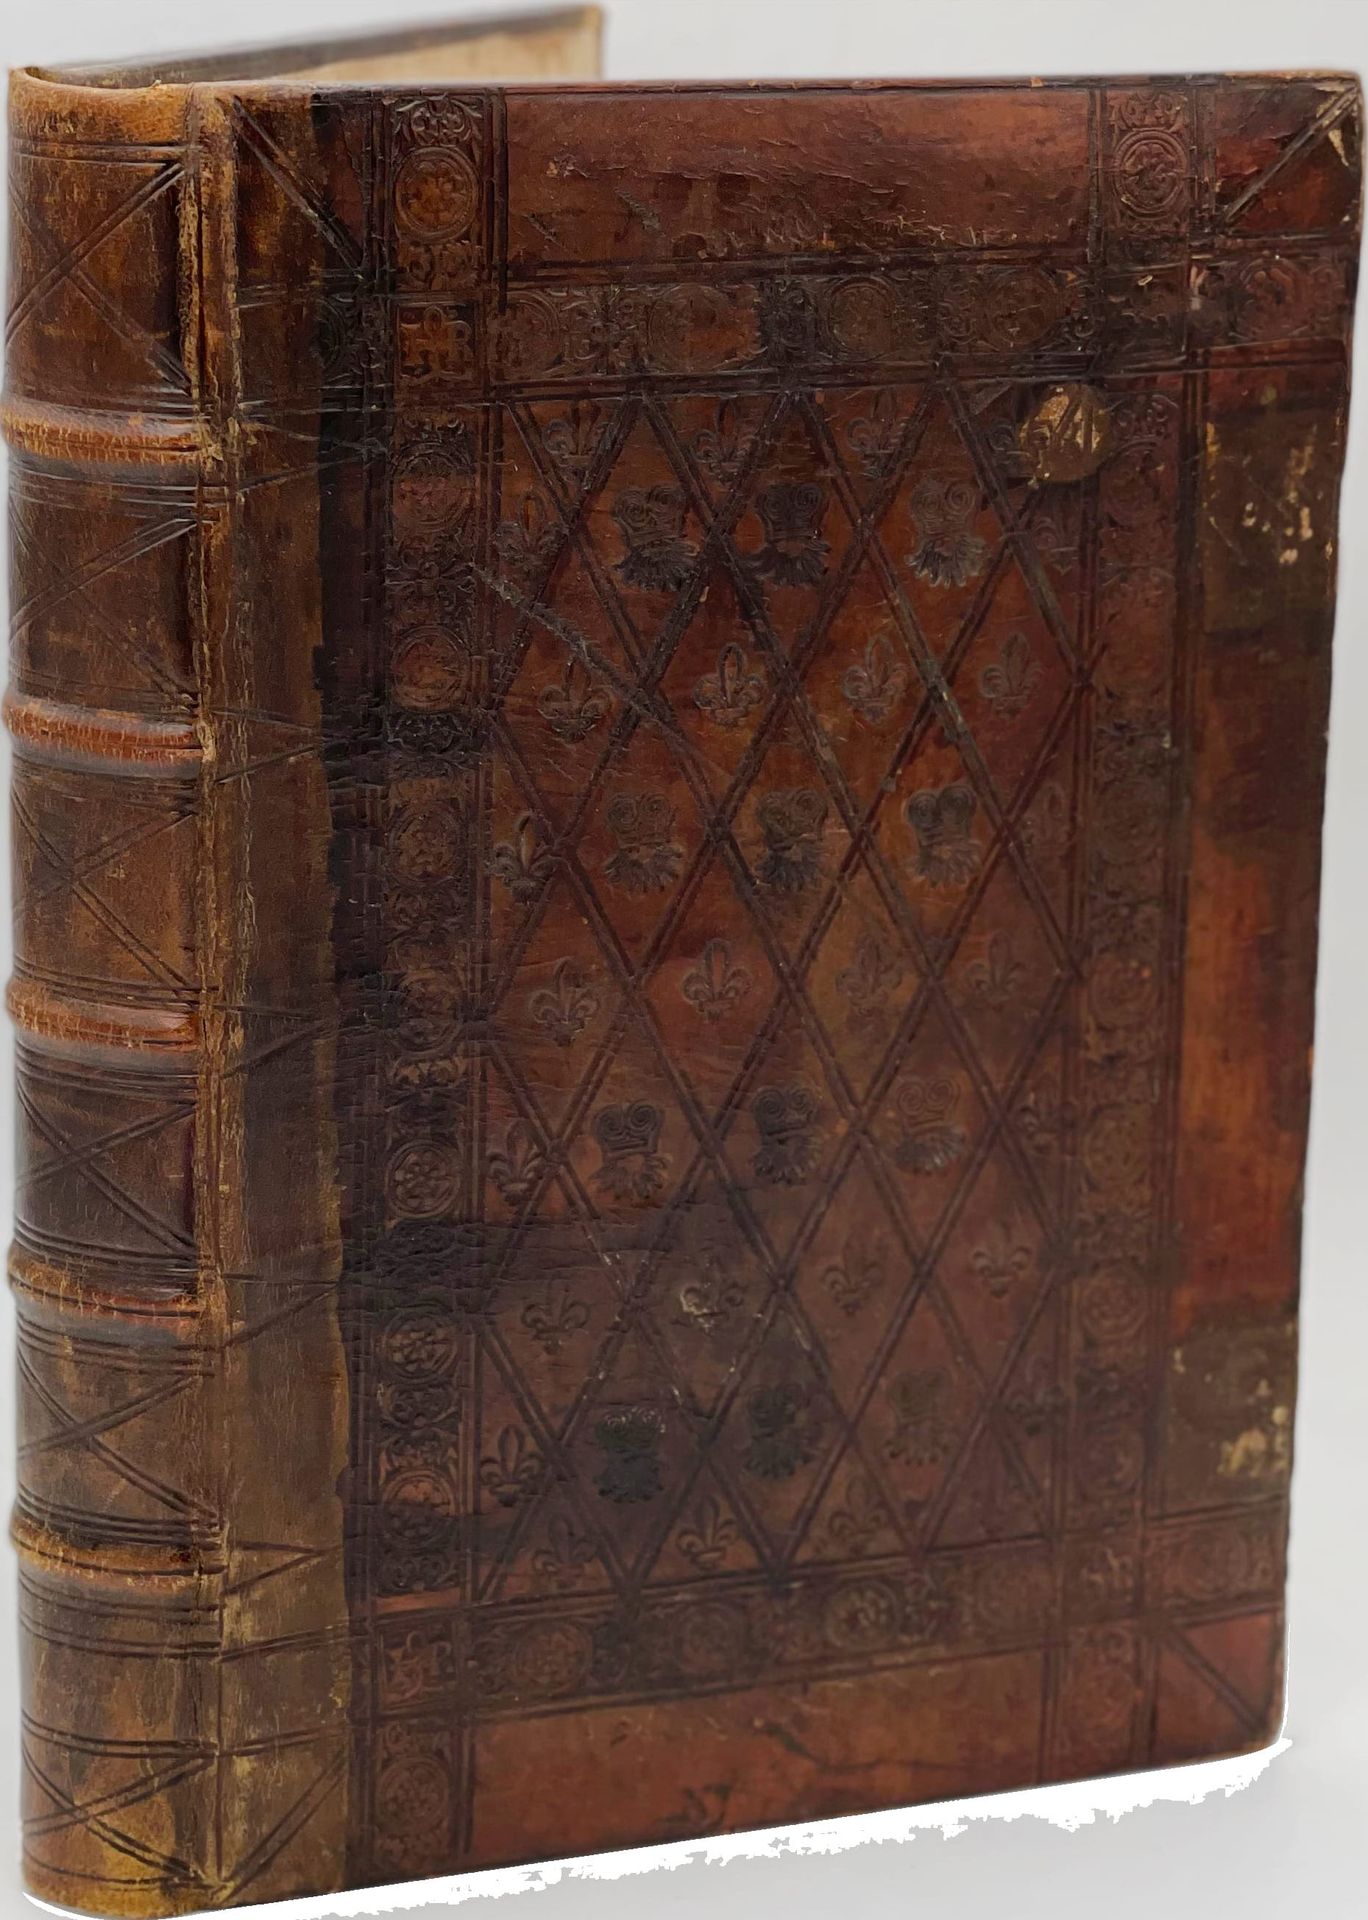 RELIURE DU XVIe SIÈCLE. Legatura vuota, formato folio (324 x 214 mm) in vitello &hellip;